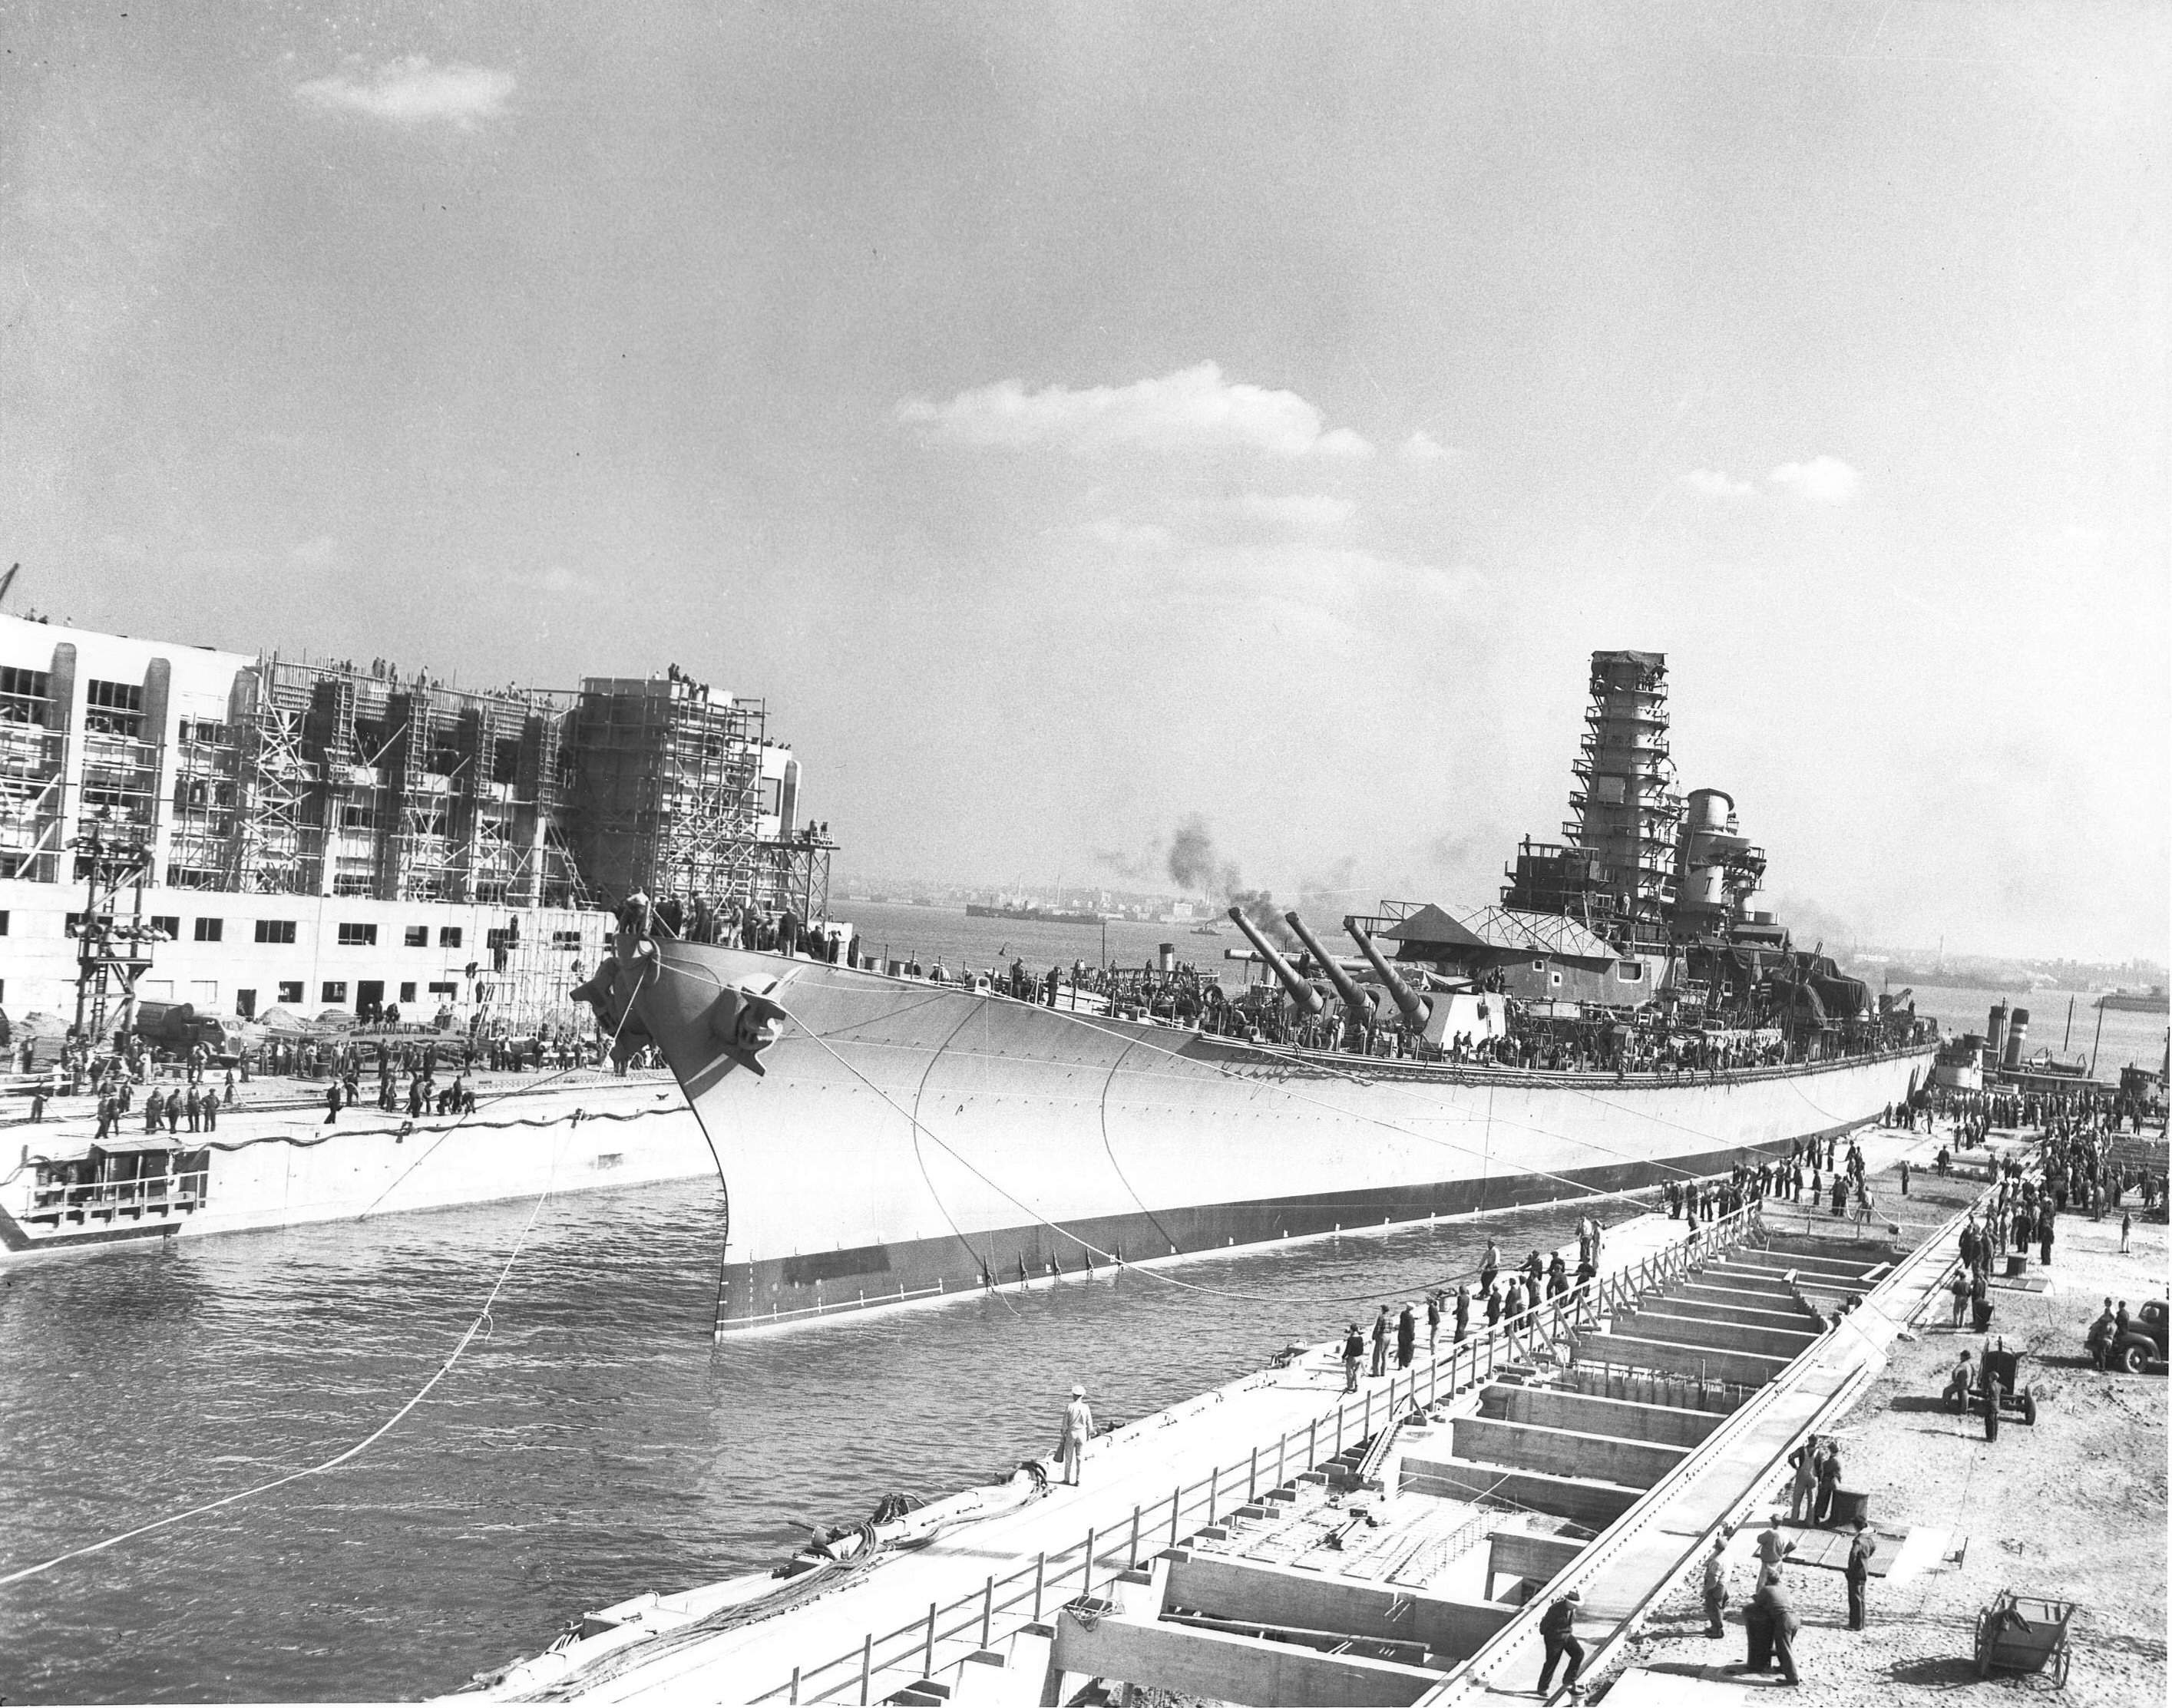 Battleship Iowa shortly after launching, New York Navy Yard, New York, United States, late Aug 1942